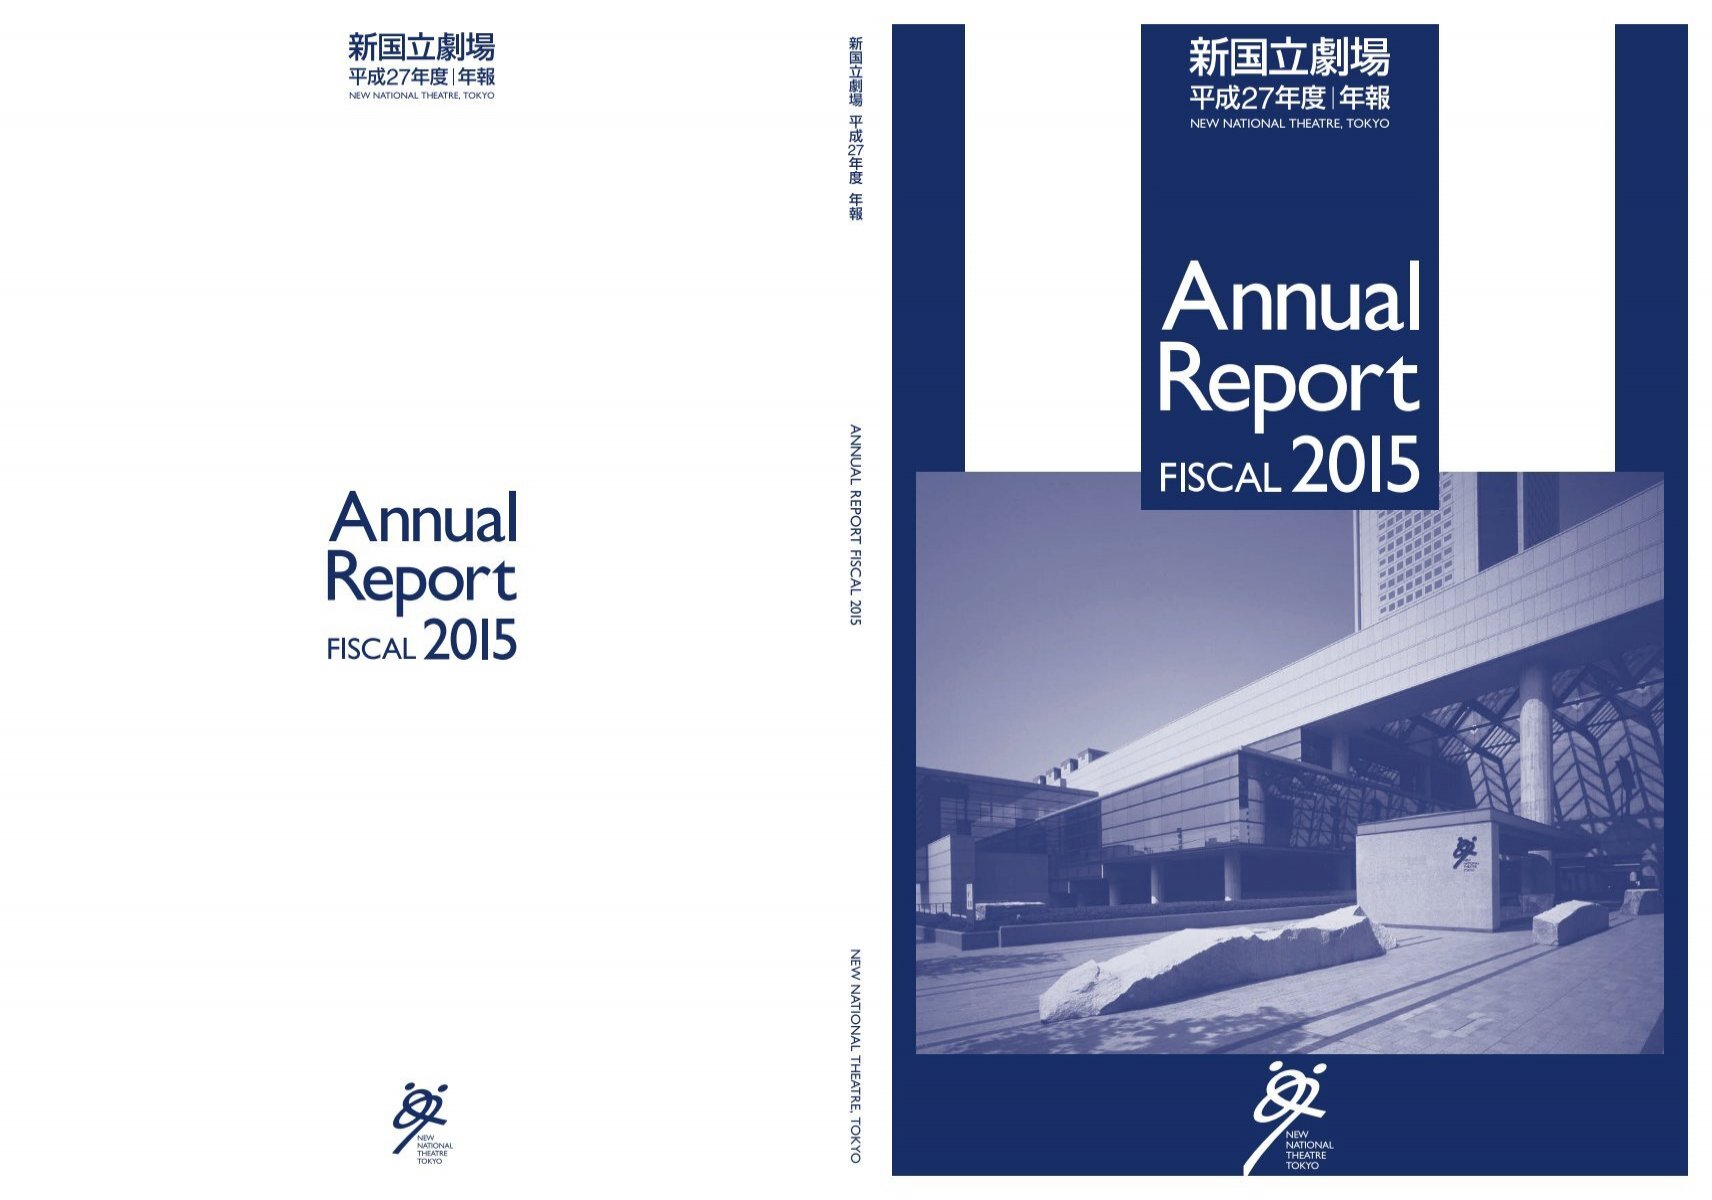 Annual Report 27